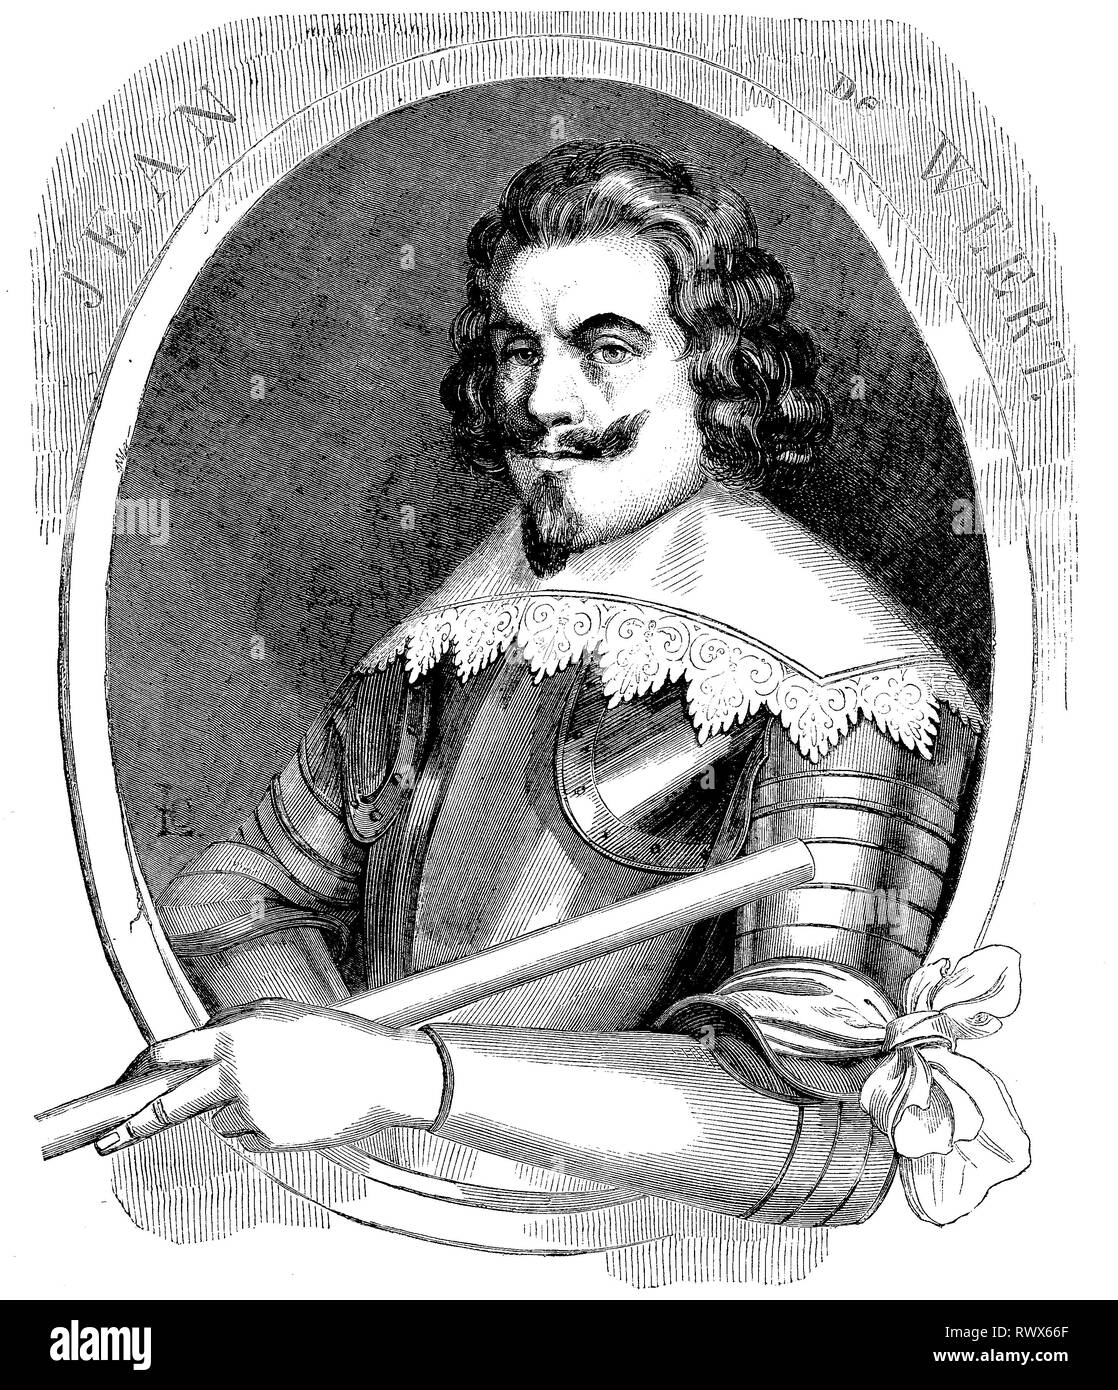 Théodore Chevignard de Chavigny, comte de Toulongeon, geboren 1687 1771 franzÃ, gestorben,¶sischer Aristokrat und Diplomat / Théodore Chevignard de Chavigny, comte de Toulongeon, né 1687, est mort en 1771, un aristocrate français et diplomate Banque D'Images